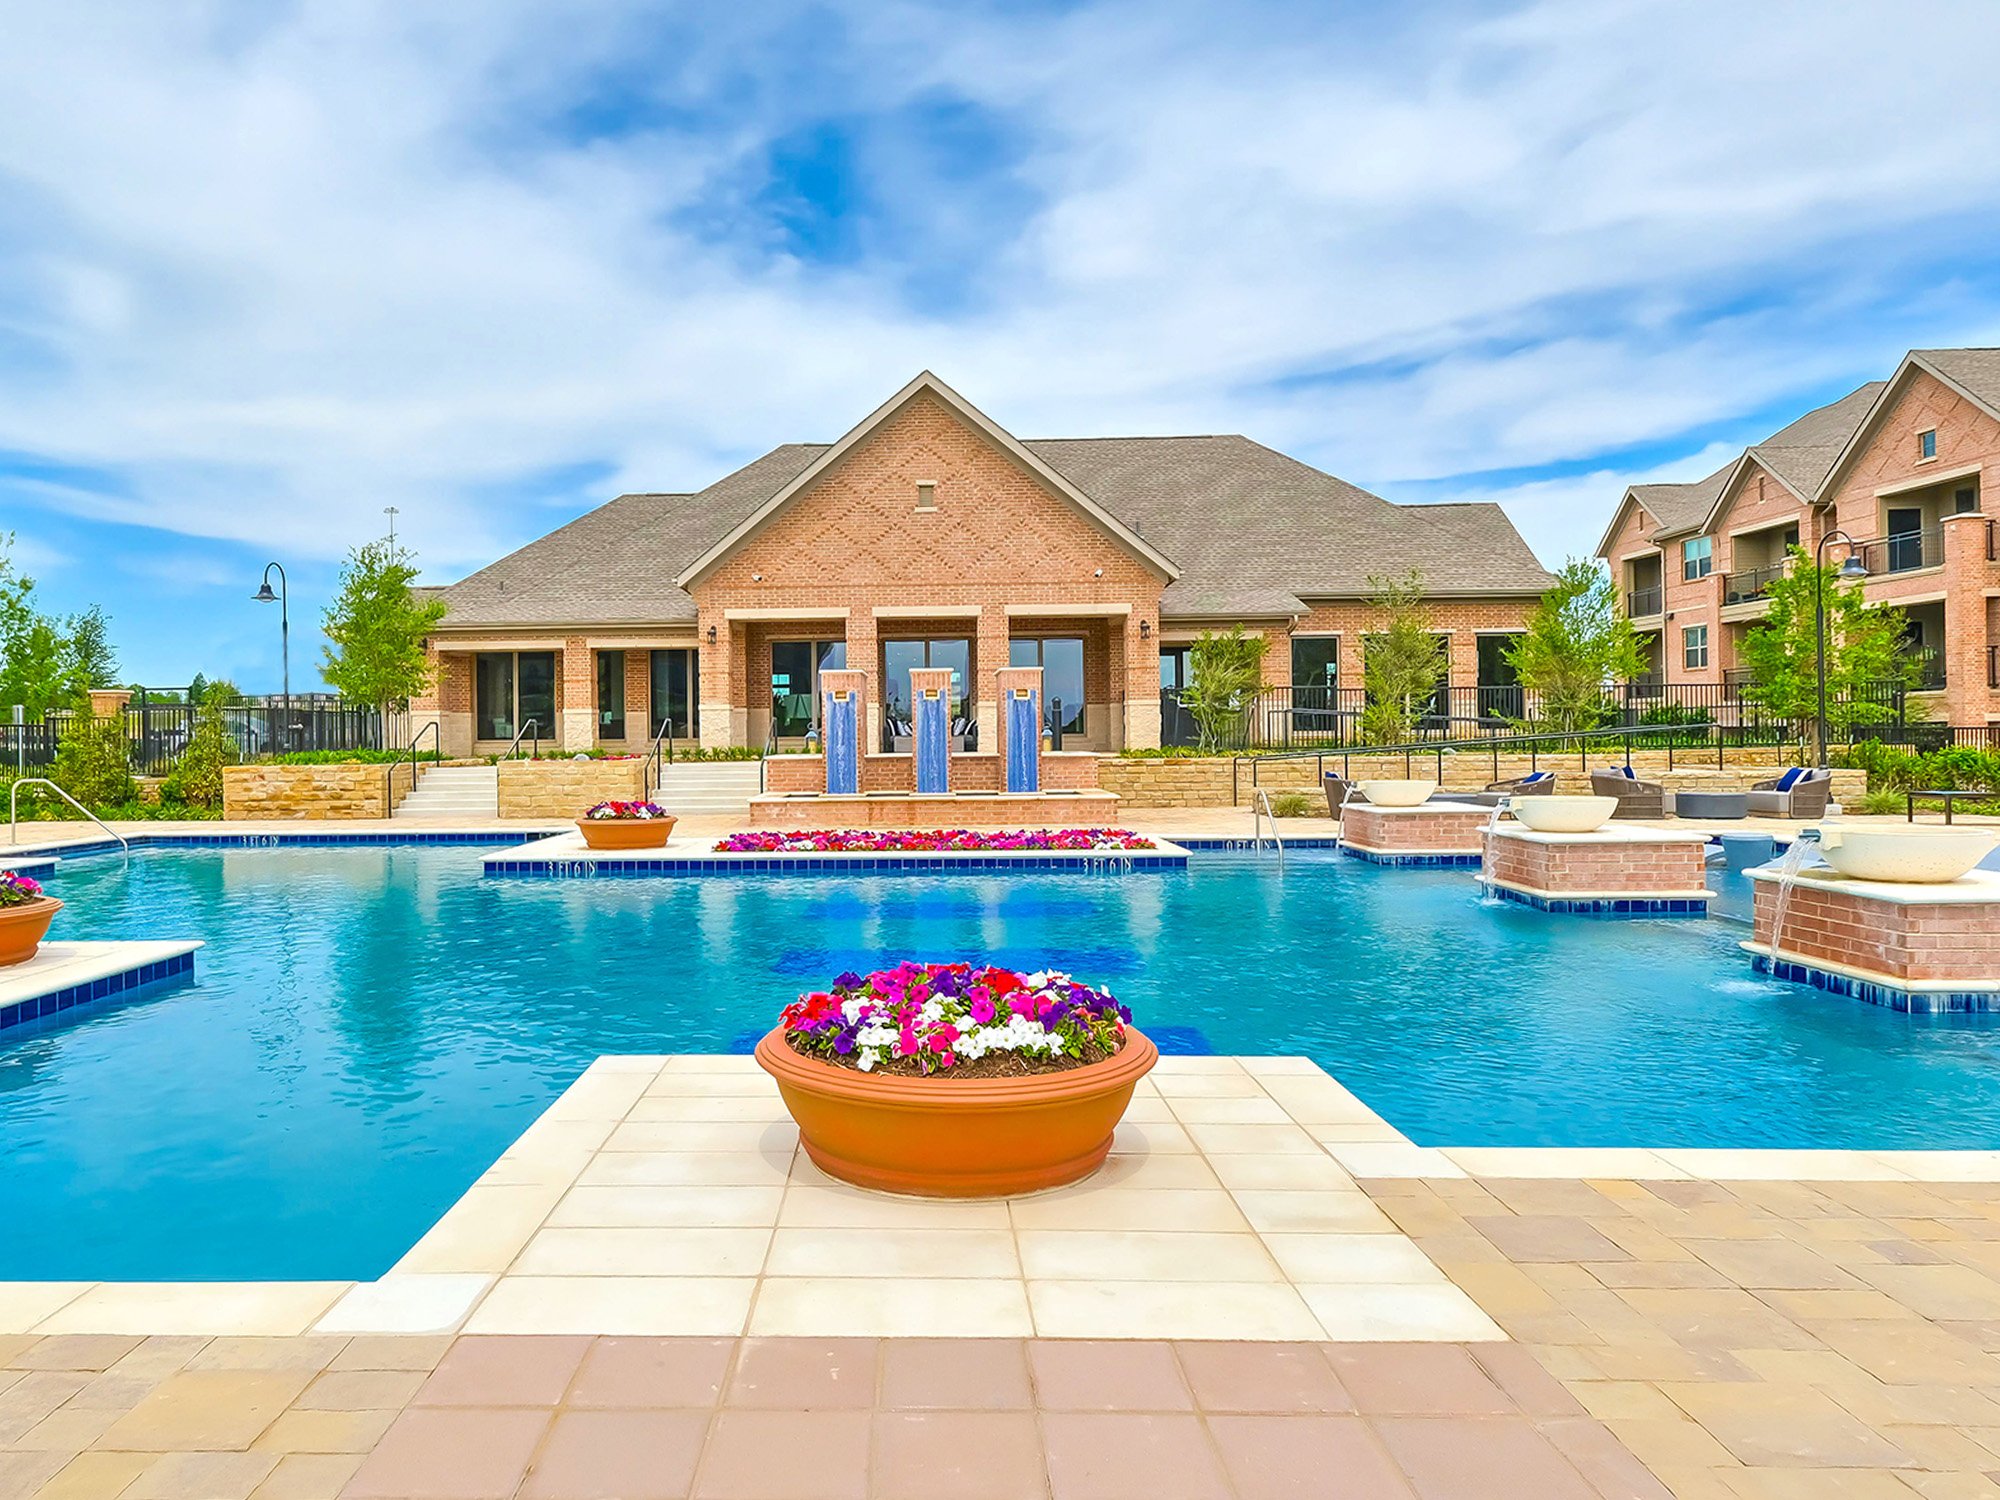 Pool area with flower garden. AVE near Dallas, Texas